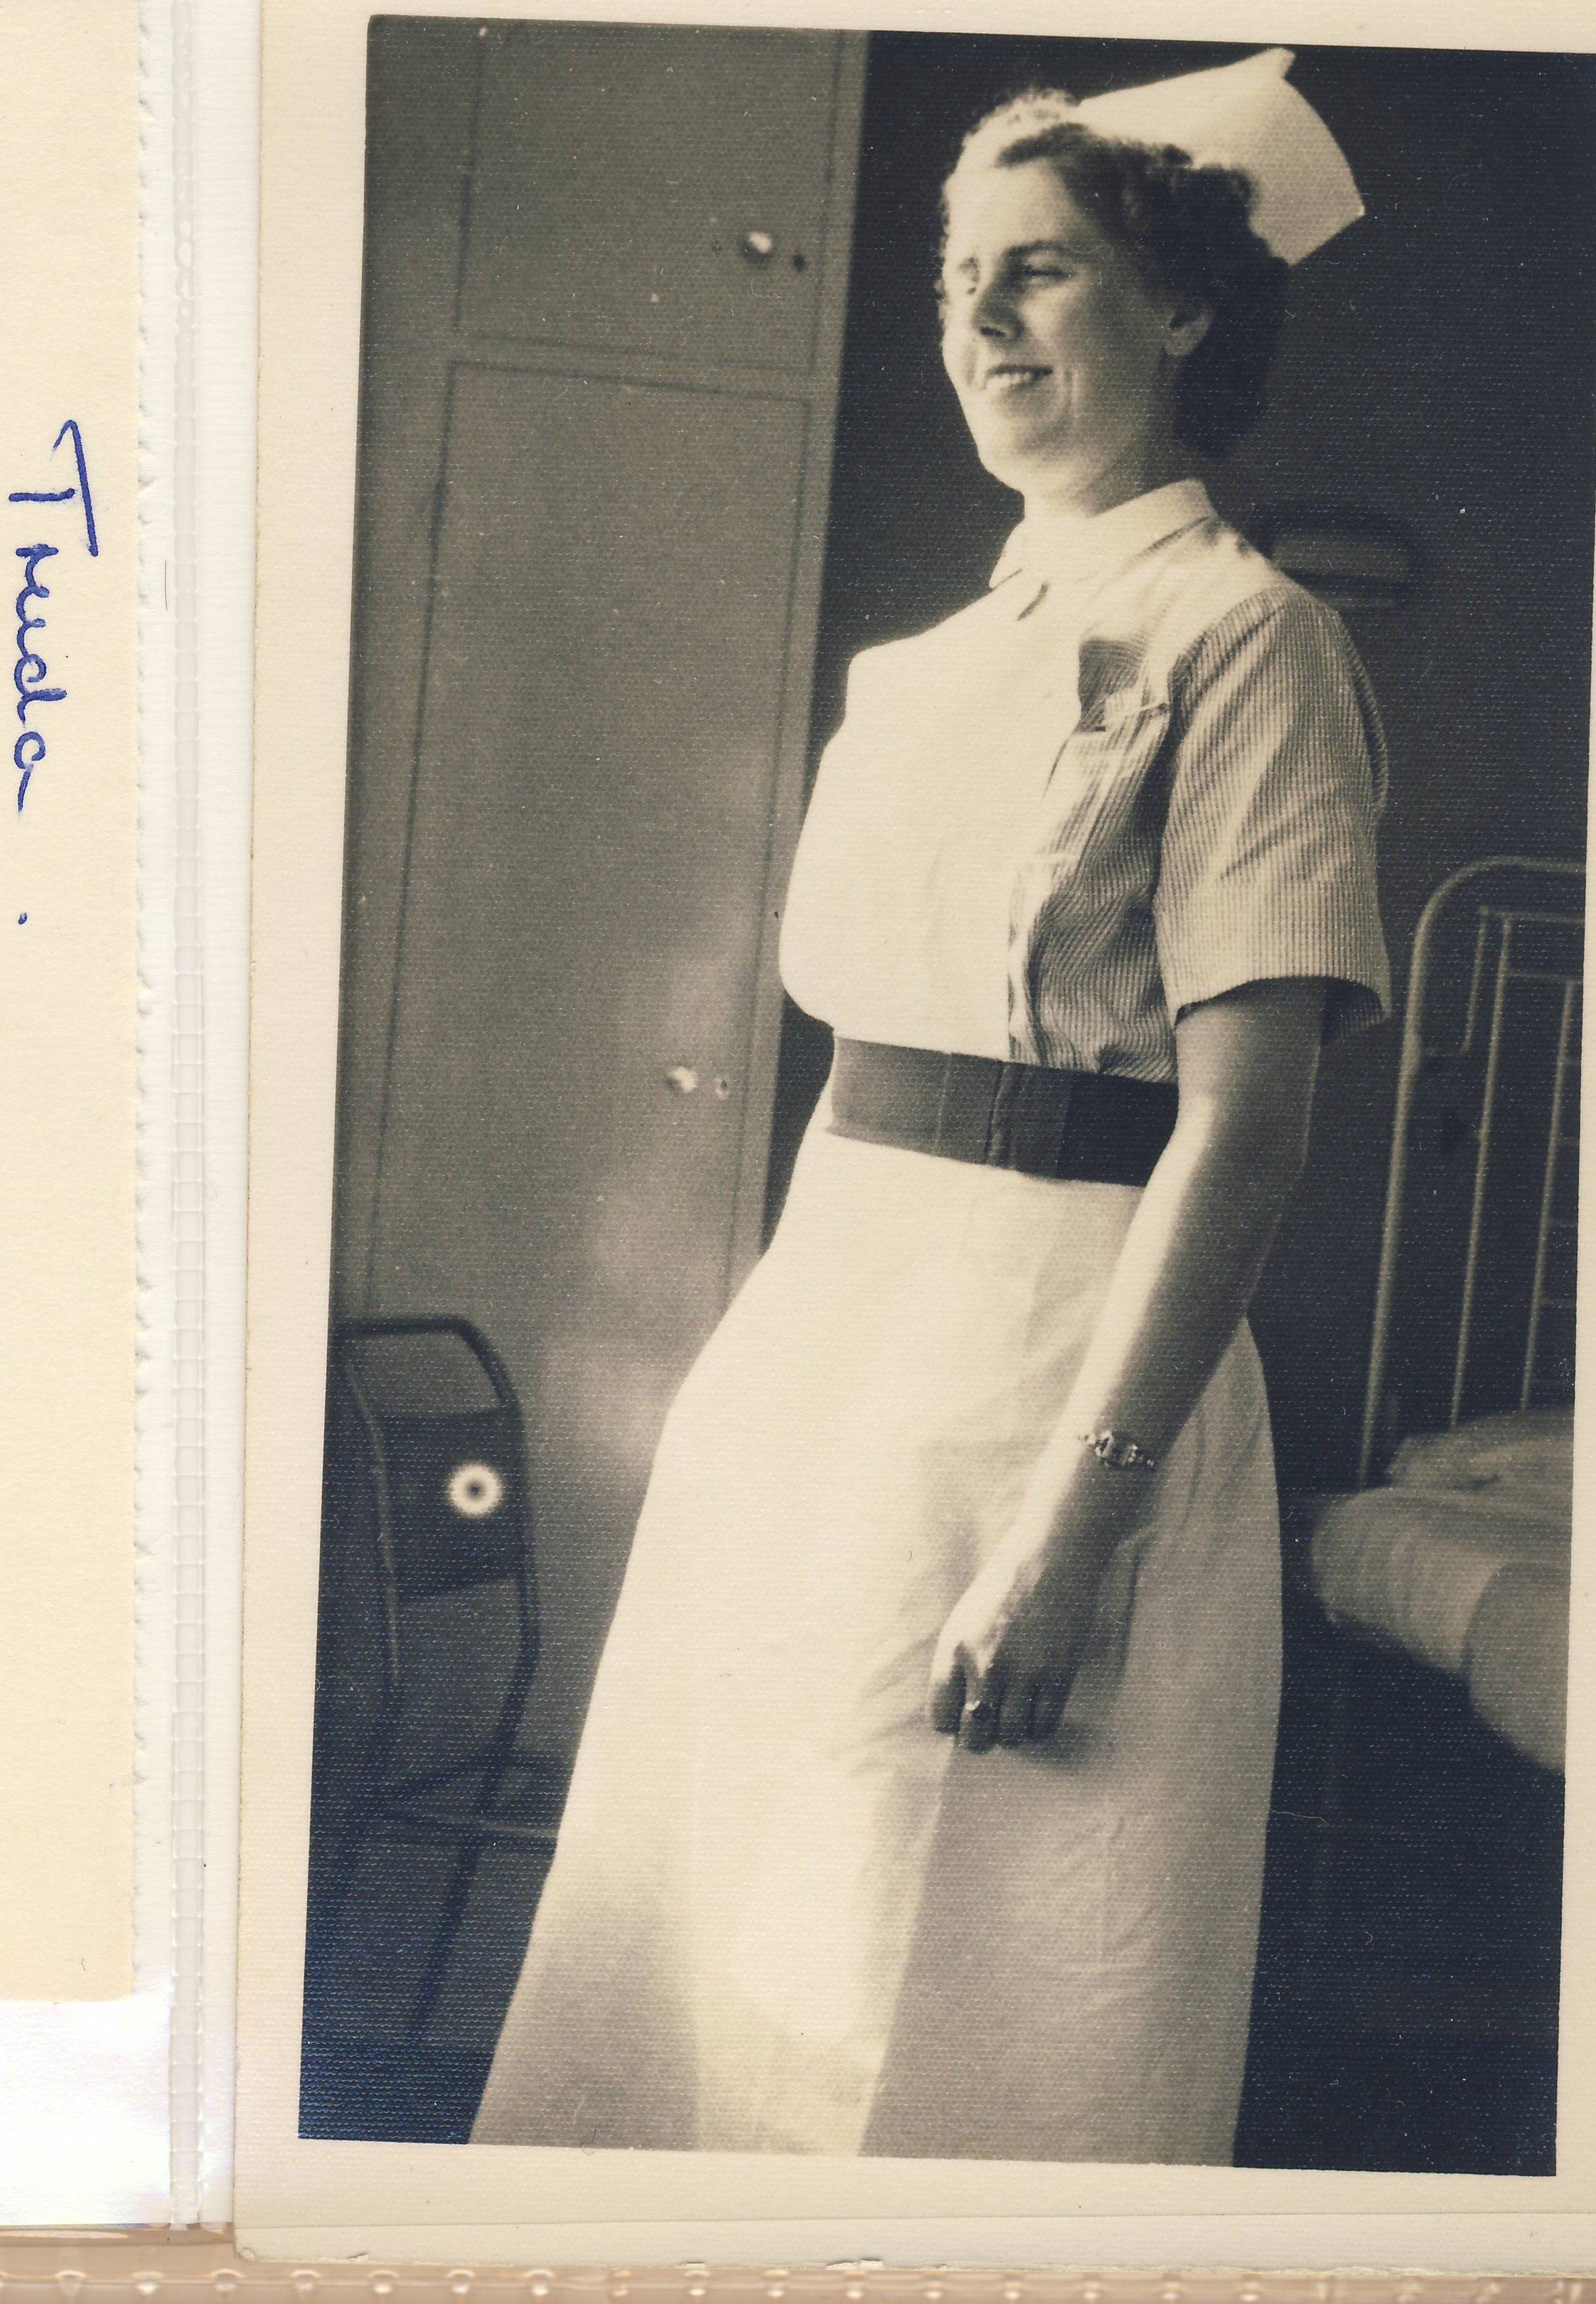 Truda in her nursing uniform